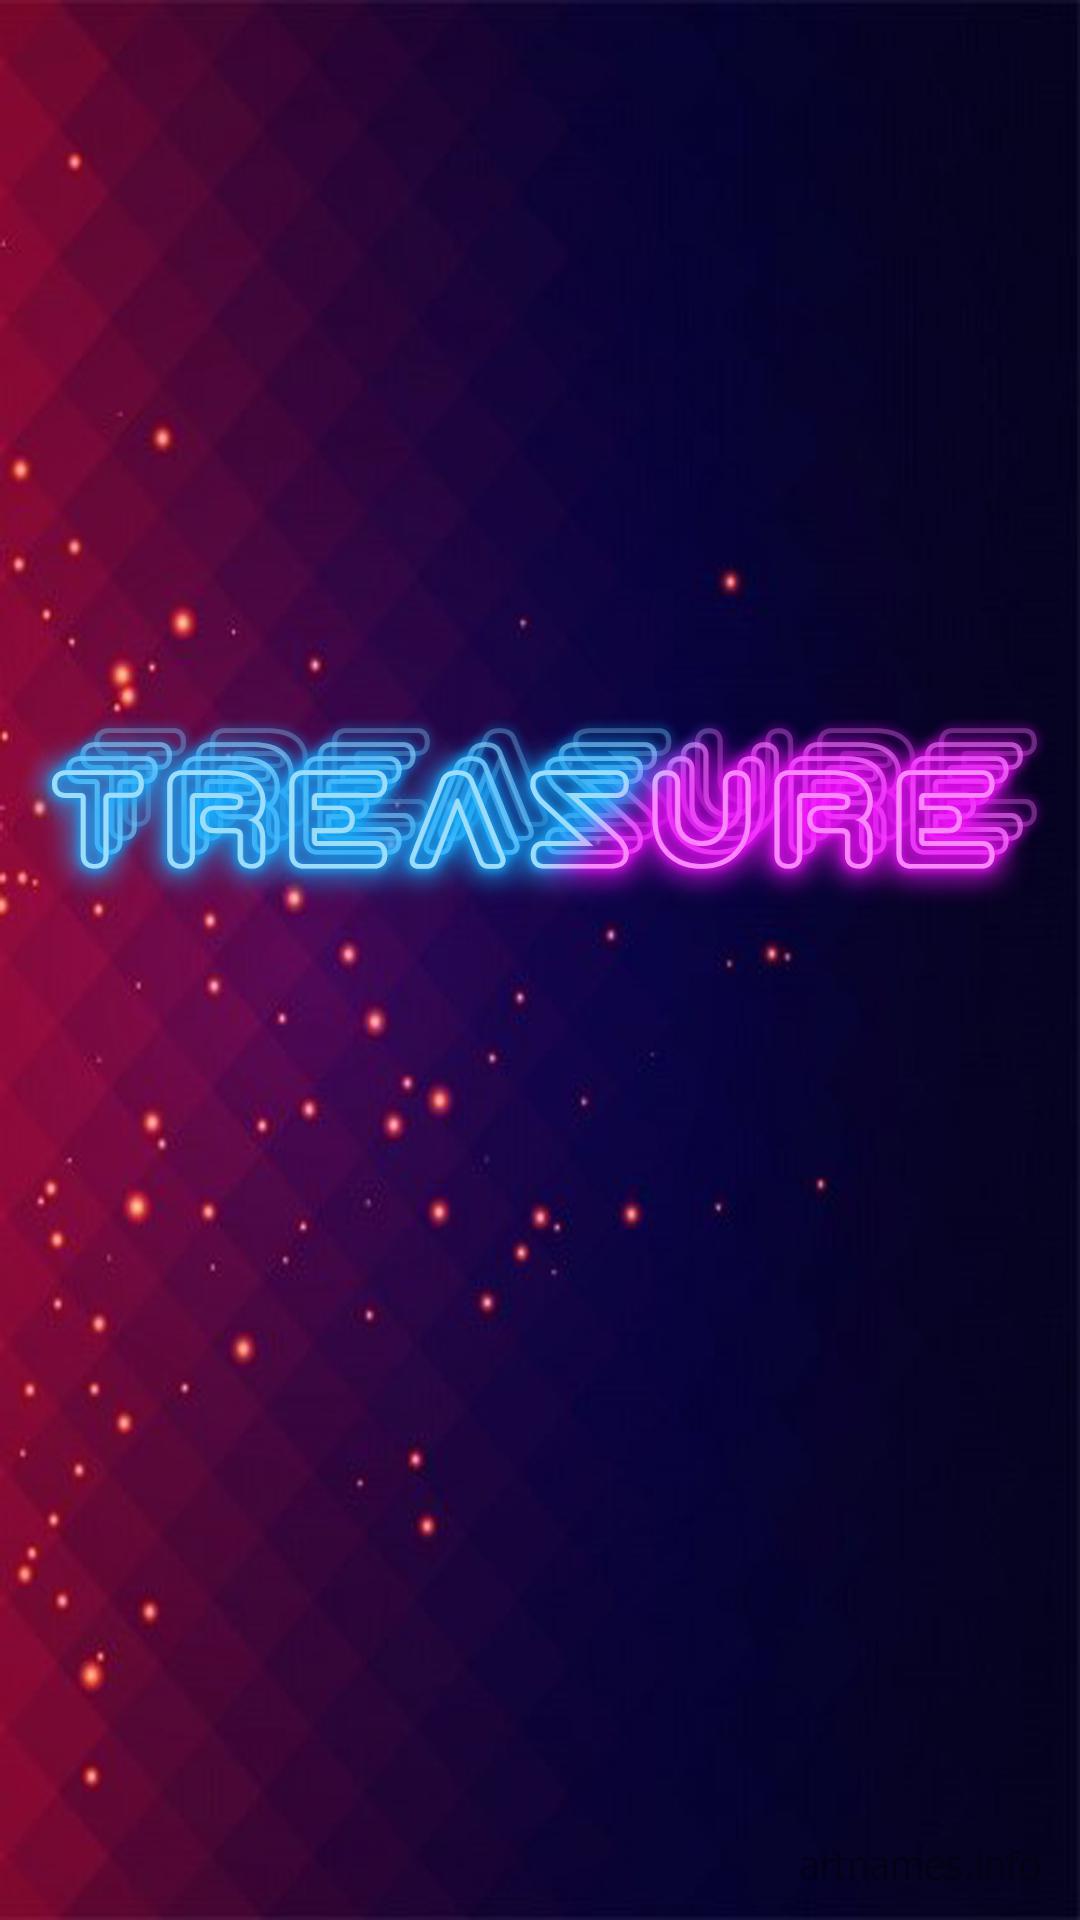 Treasure as a ART Name Wallpaper!